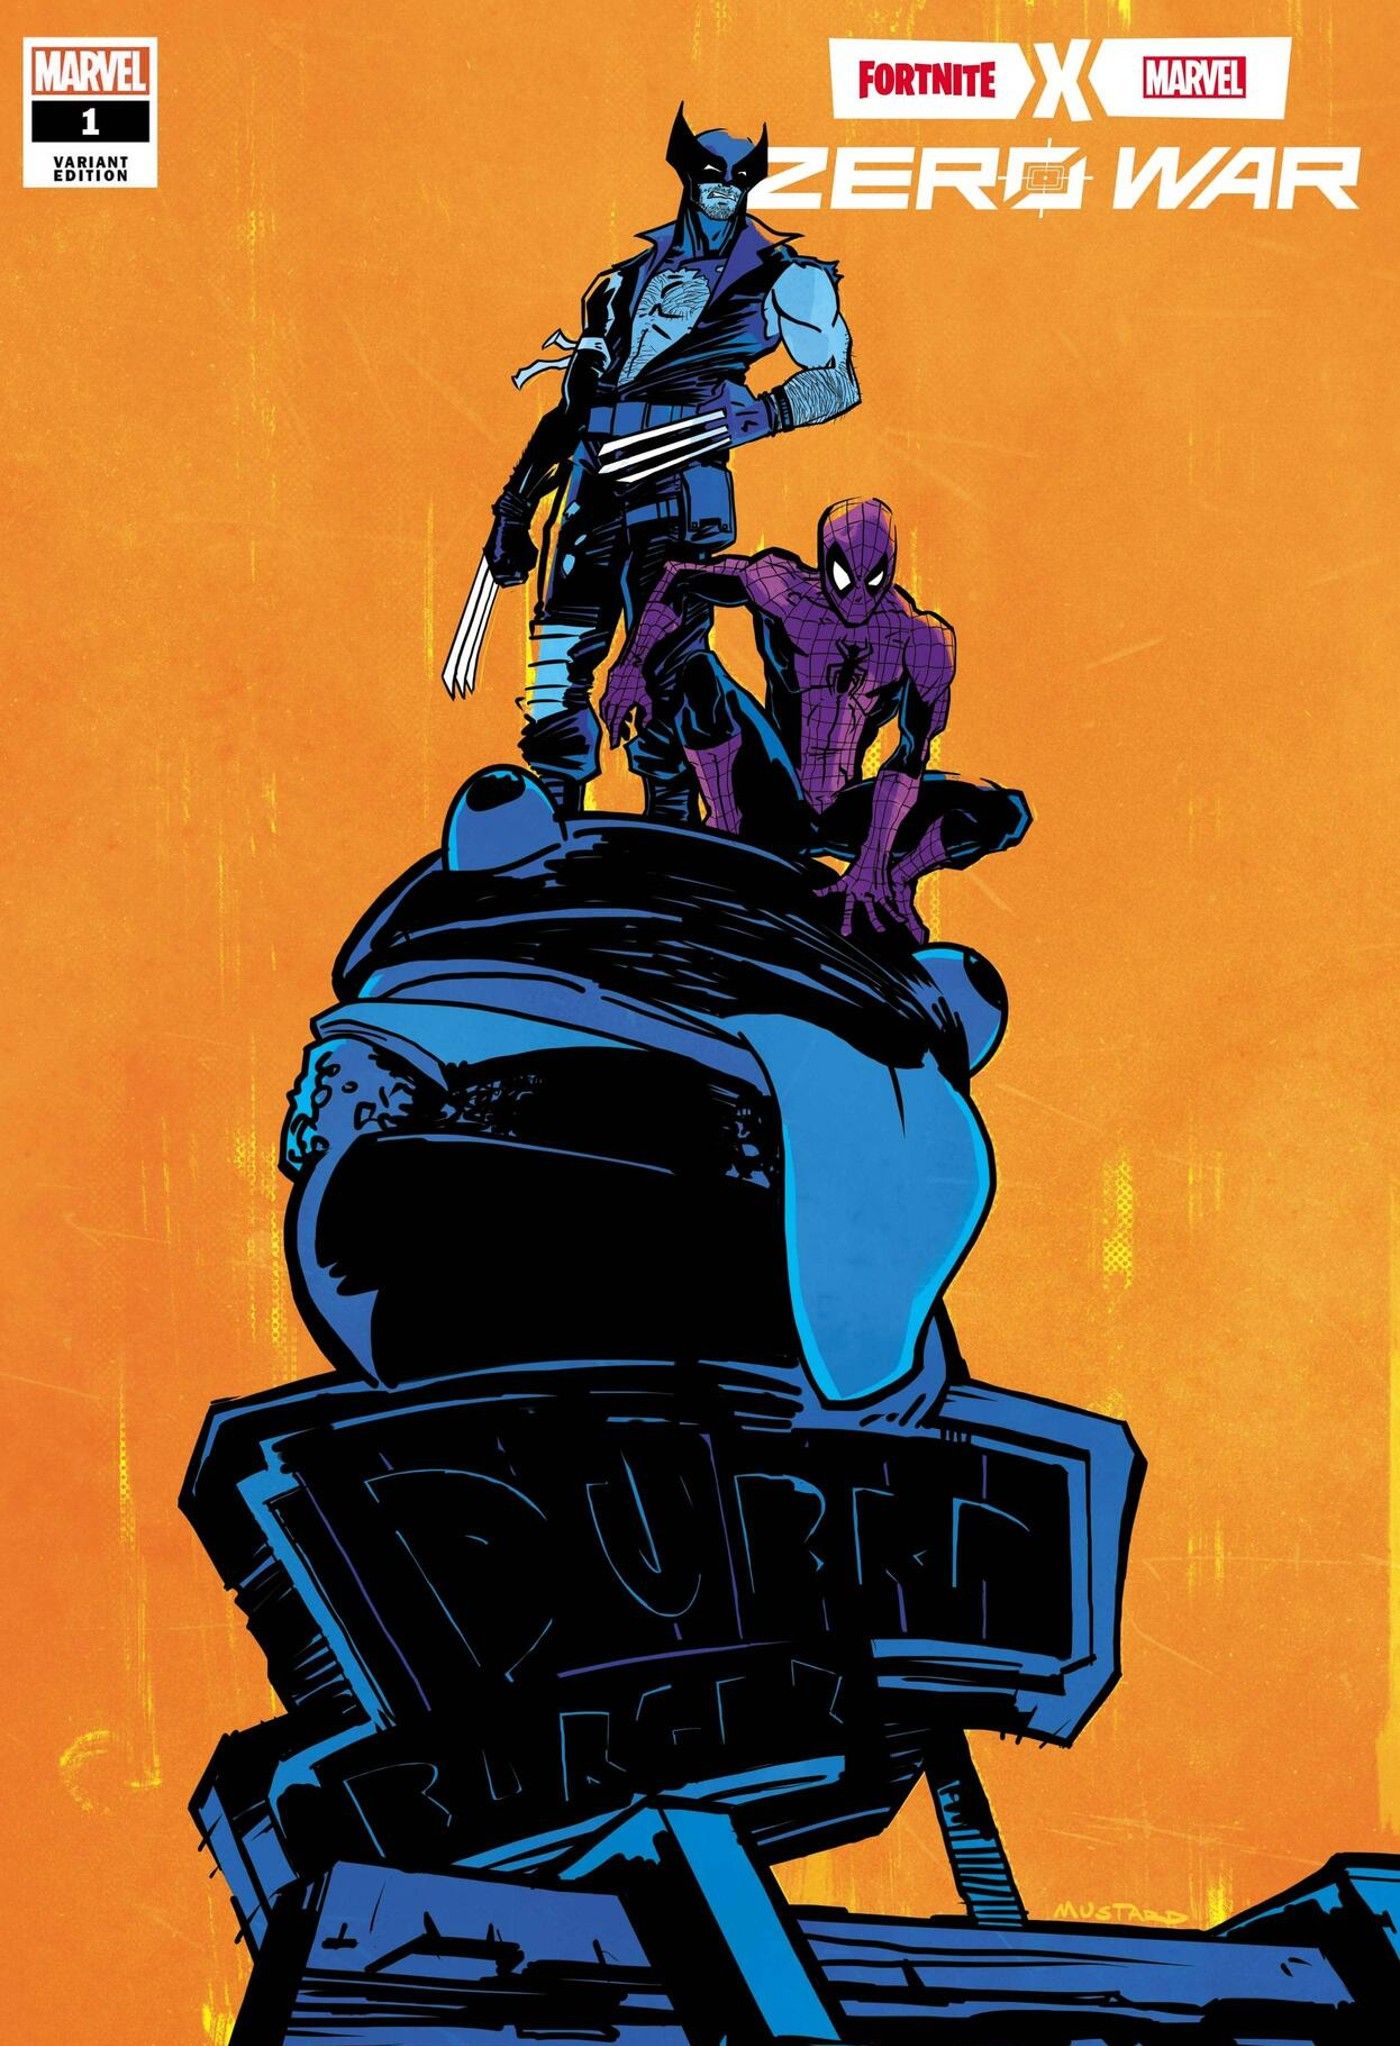 Fortnite x Marvel Zero War 1 by Donald Mustard cover art